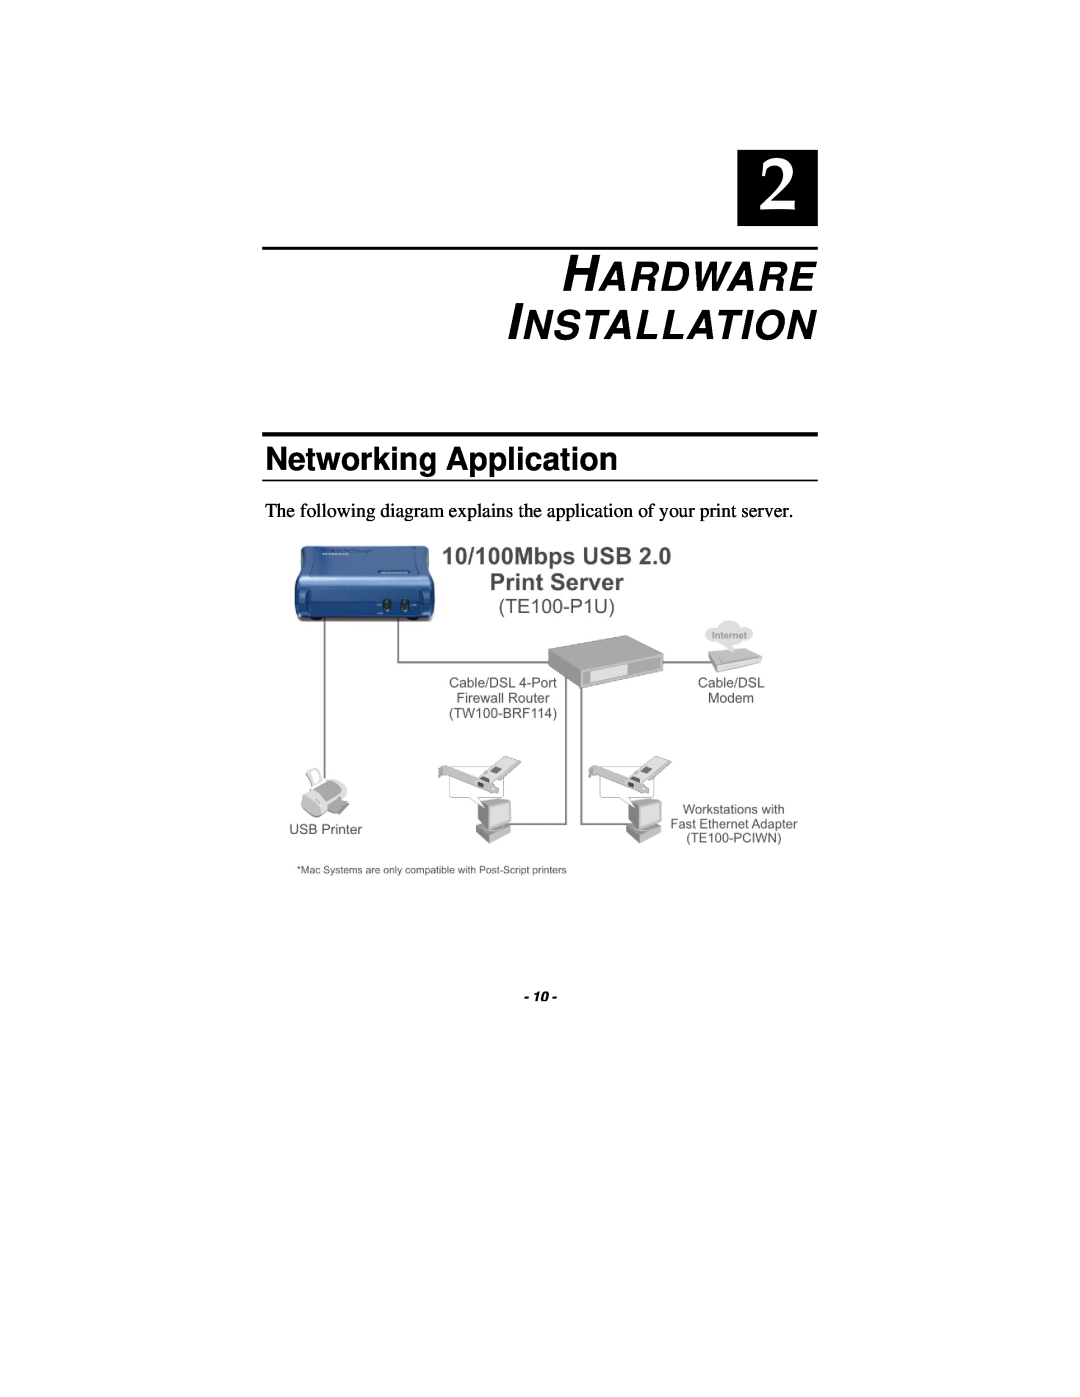 TRENDnet TE100-P1U manual Hardware Installation, Networking Application, Pocket-sized Print Server 